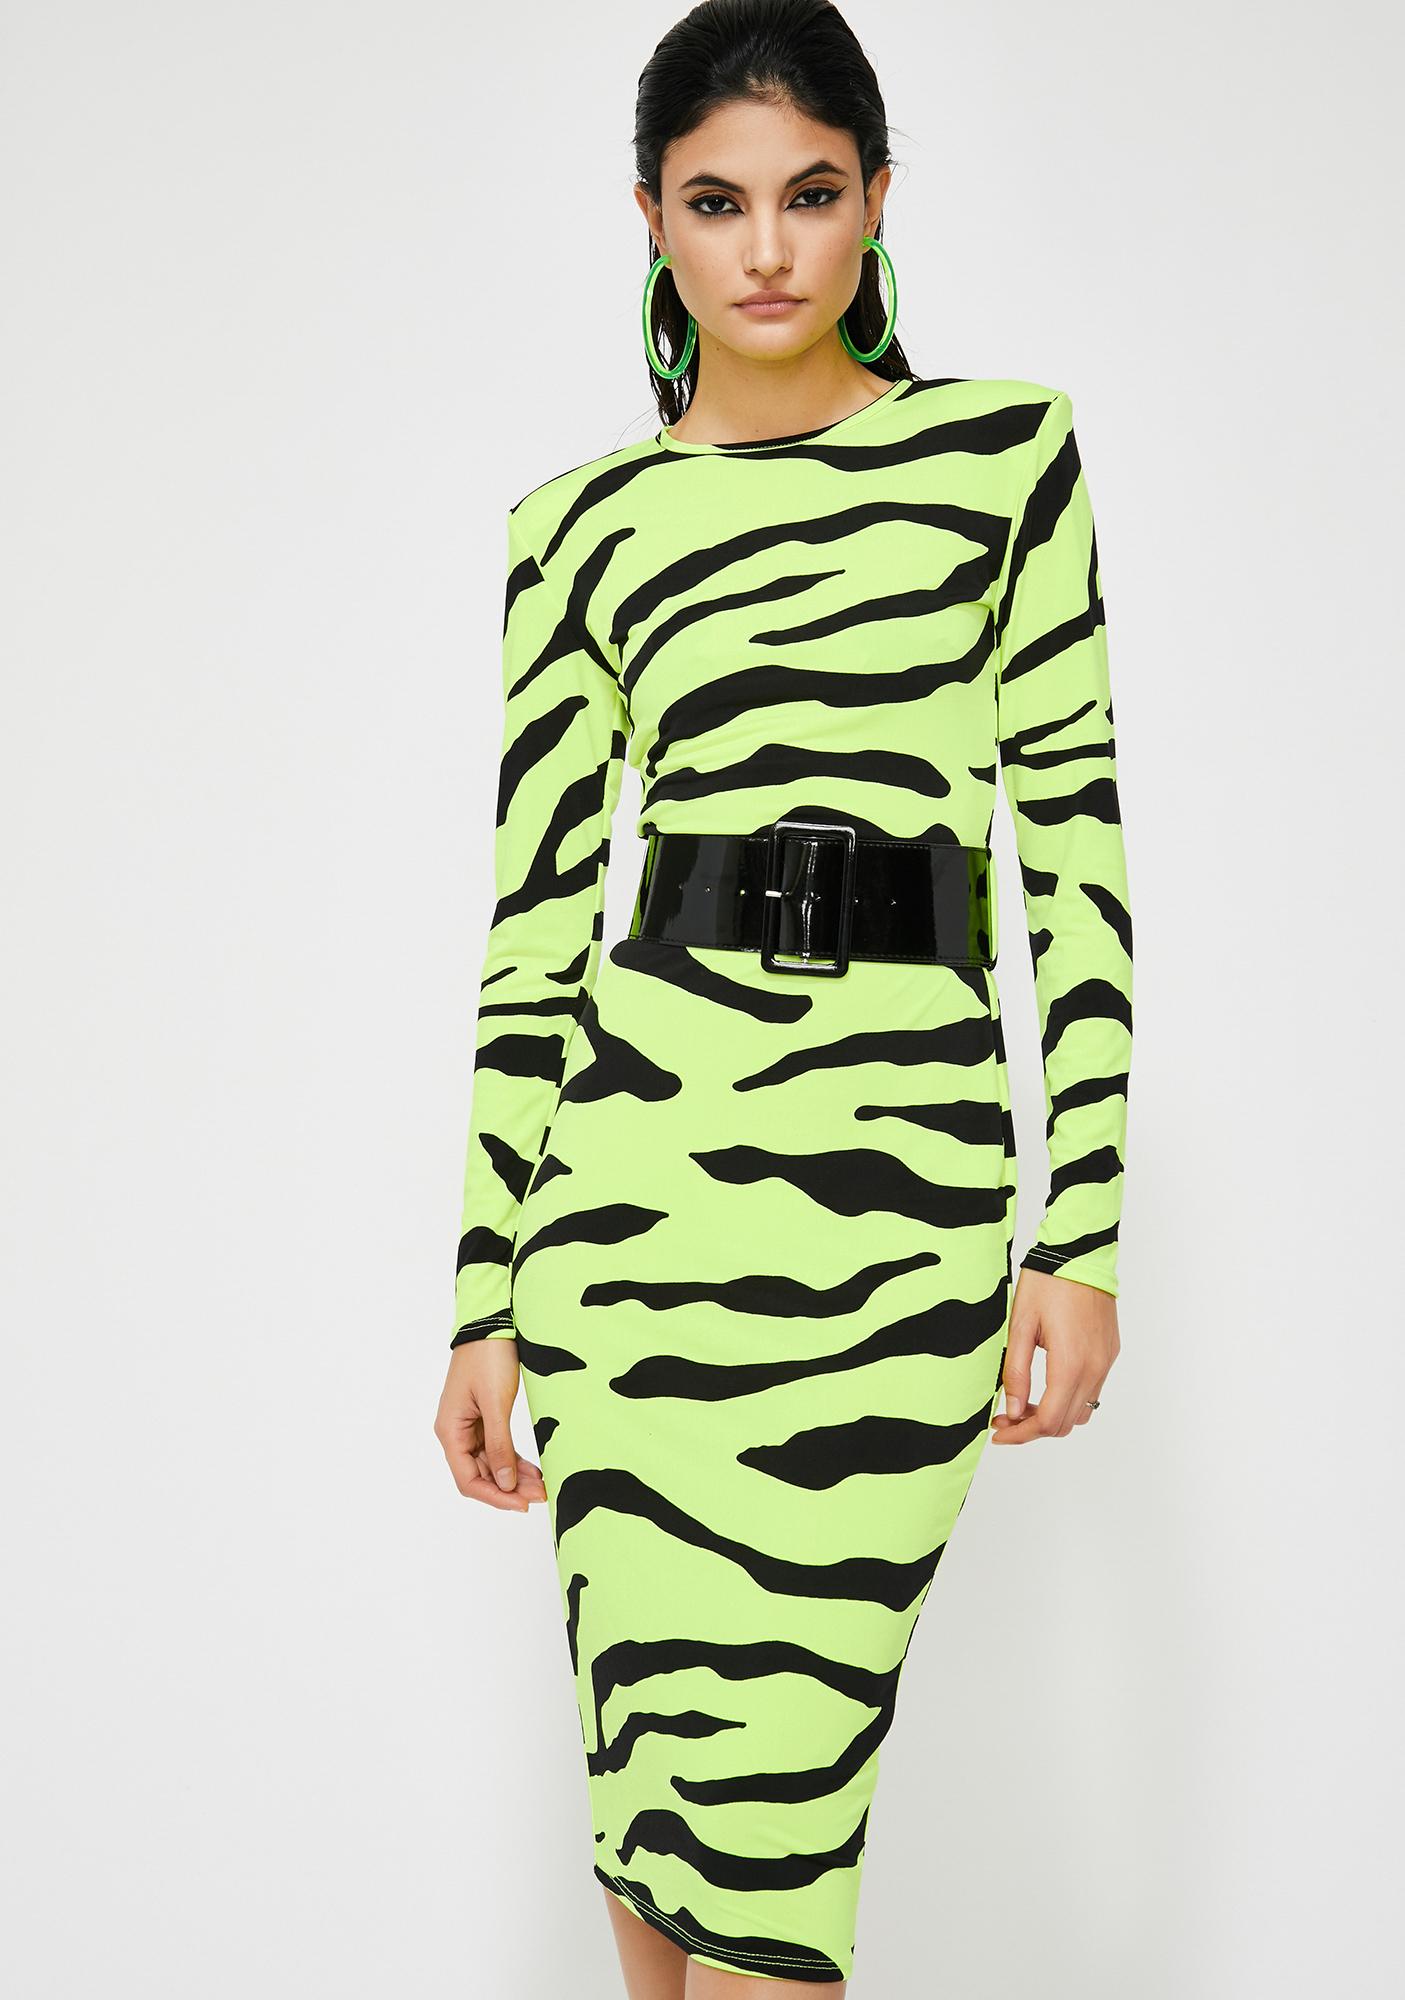 green and black zebra print dress